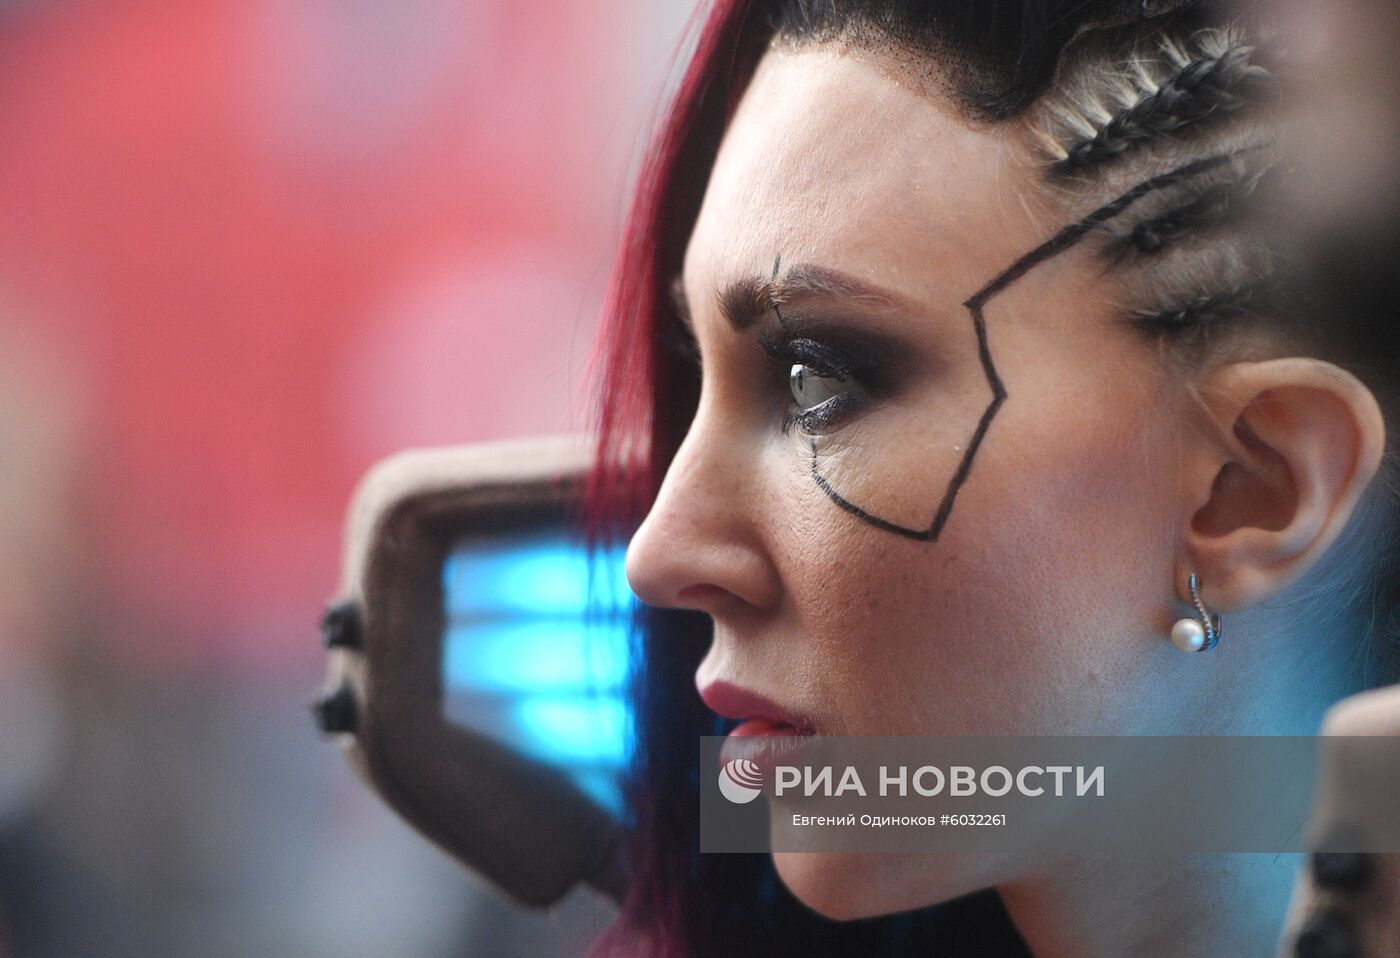 Выставка "Игромир" Comic Con Russia